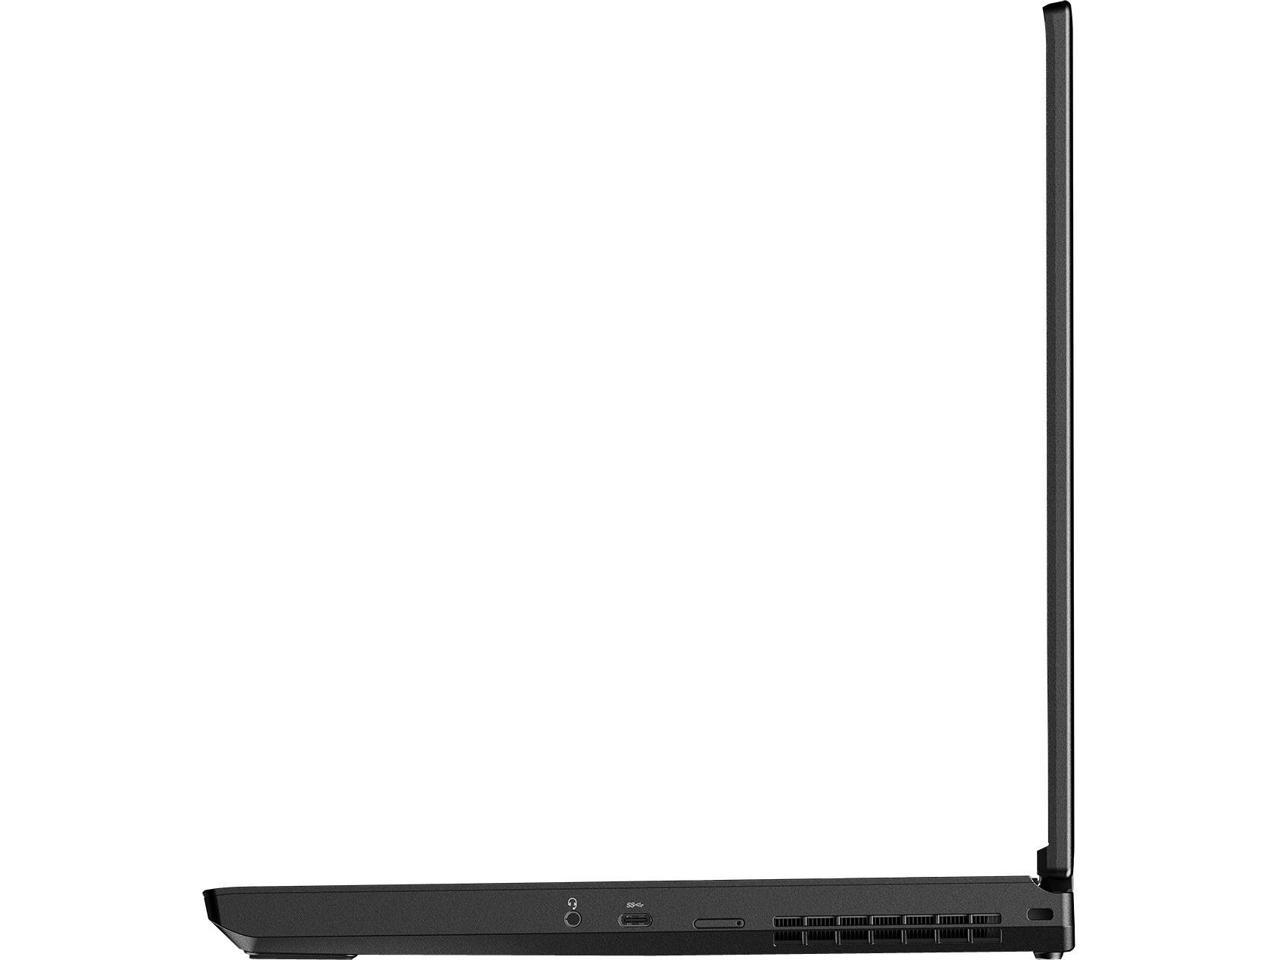 Lenovo ThinkPad P53 Mobile Workstation 20QN001VUS - Intel Six Core i7-9850H, 16GB RAM, 512GB PCIe NVMe SSD, 15.6" HDR 400 FHD IPS 500nits Display, NVIDIA Quadro T2000 4GB Graphics, Windows 10 Pro